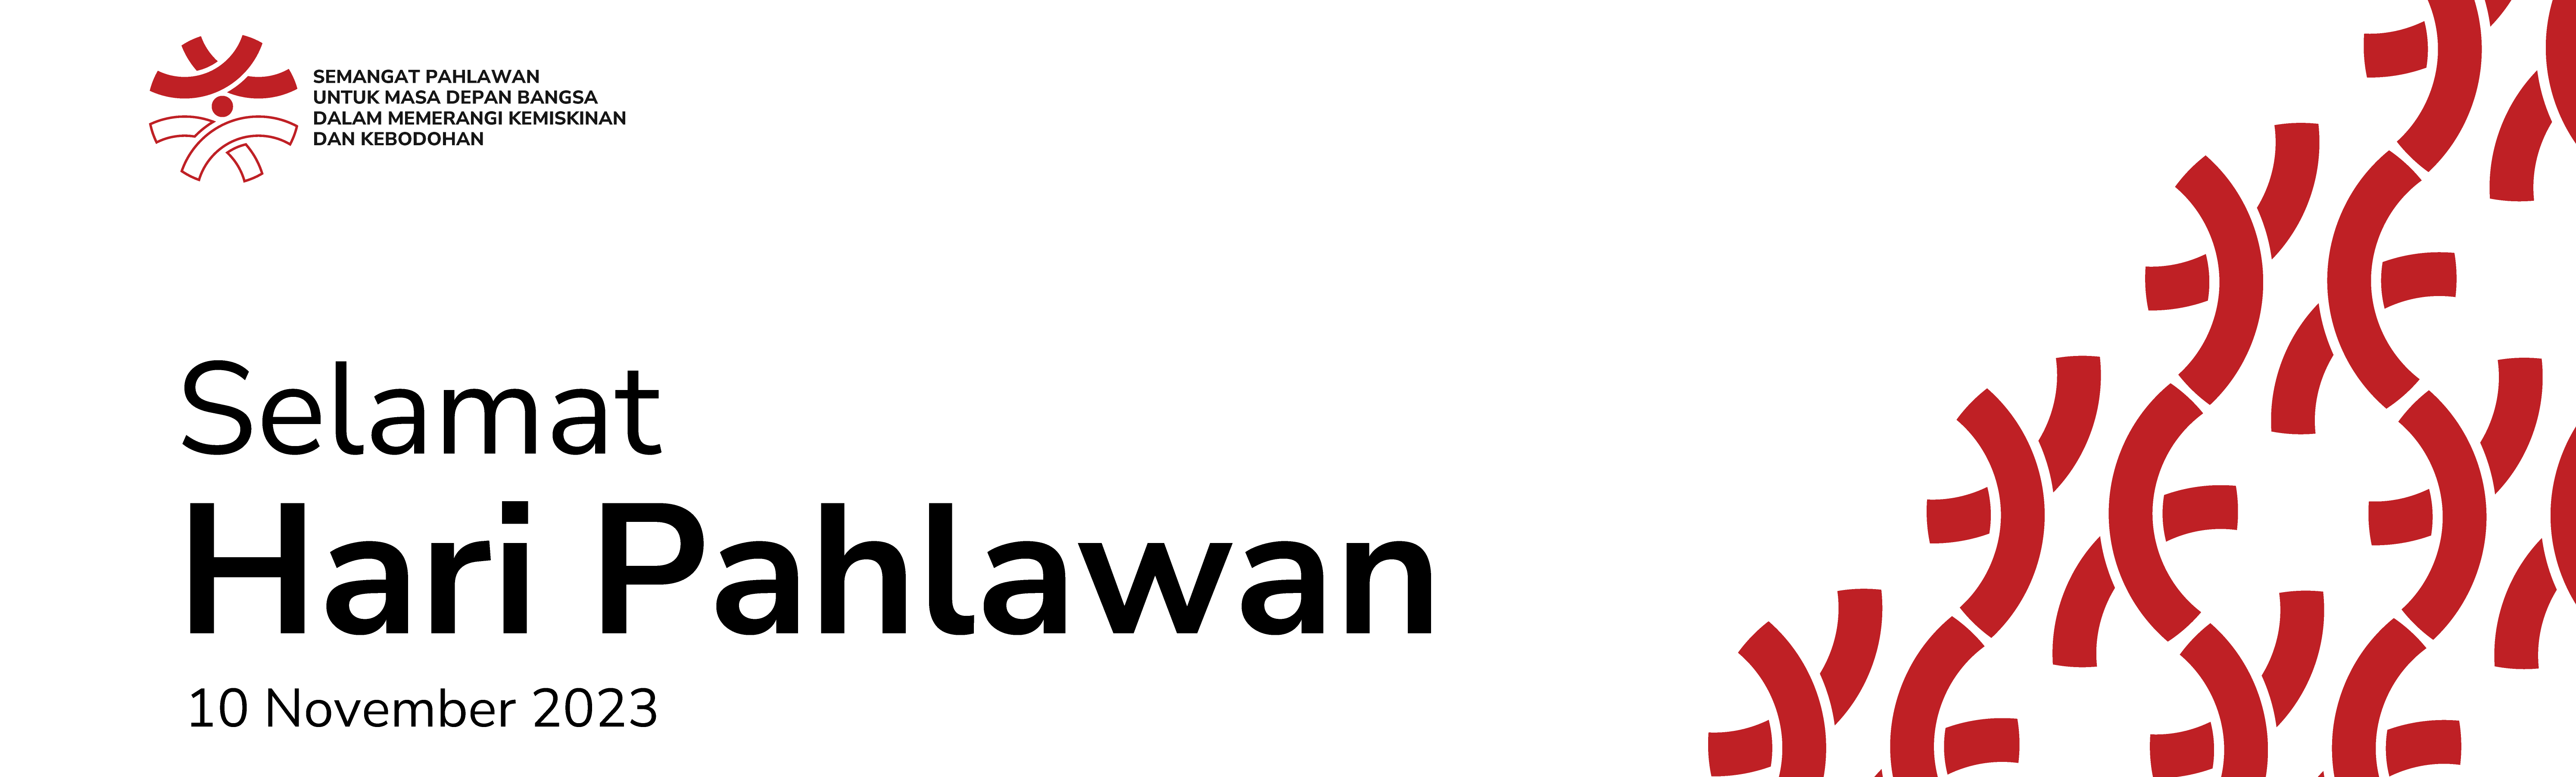 Banner Hari Pahlawan